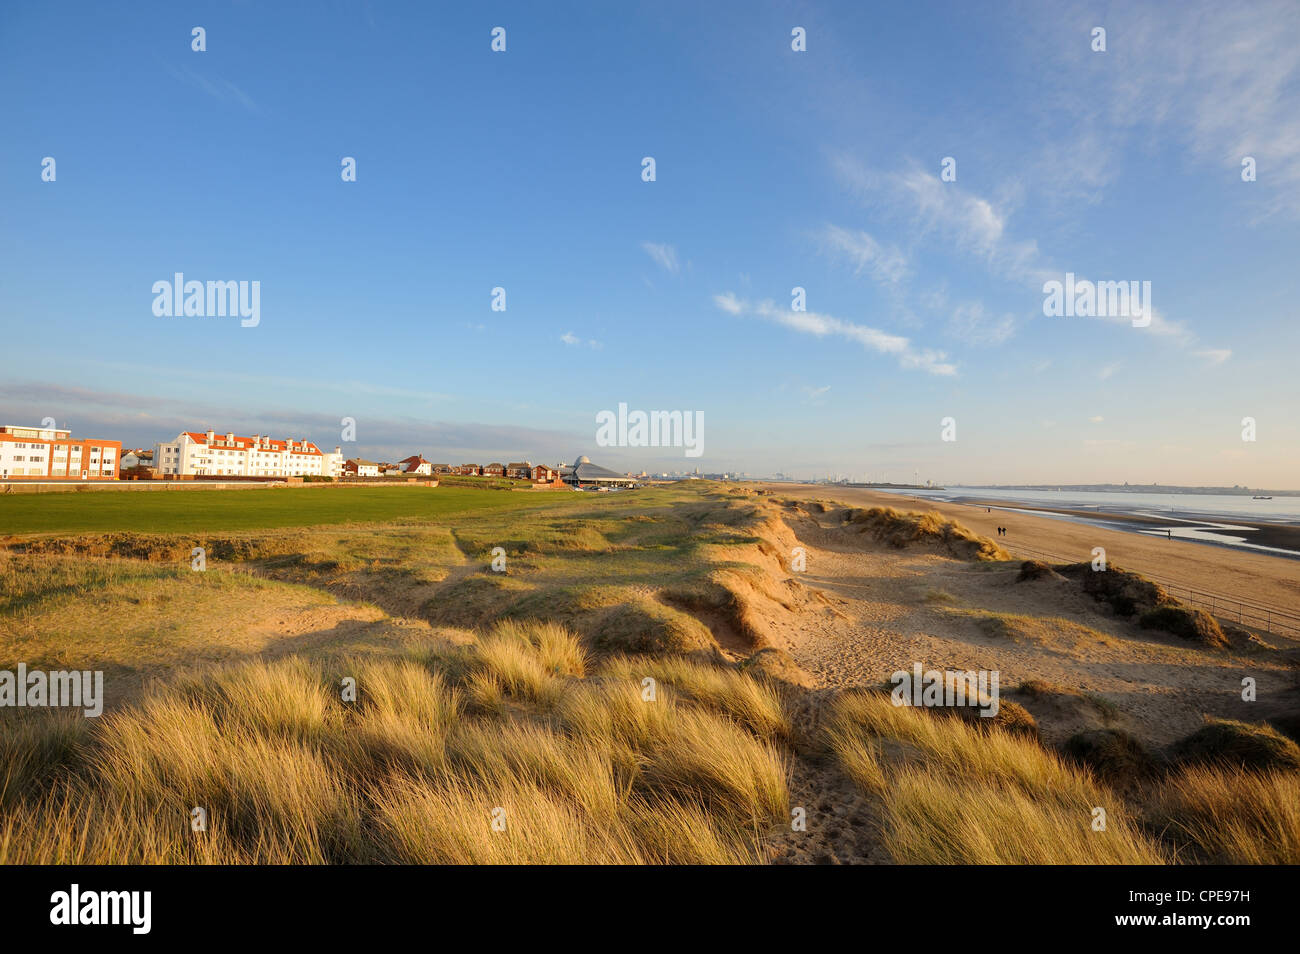 Las dunas de arena, Crosby Beach, Merseyside, Inglaterra, Reino Unido, Europa Foto de stock